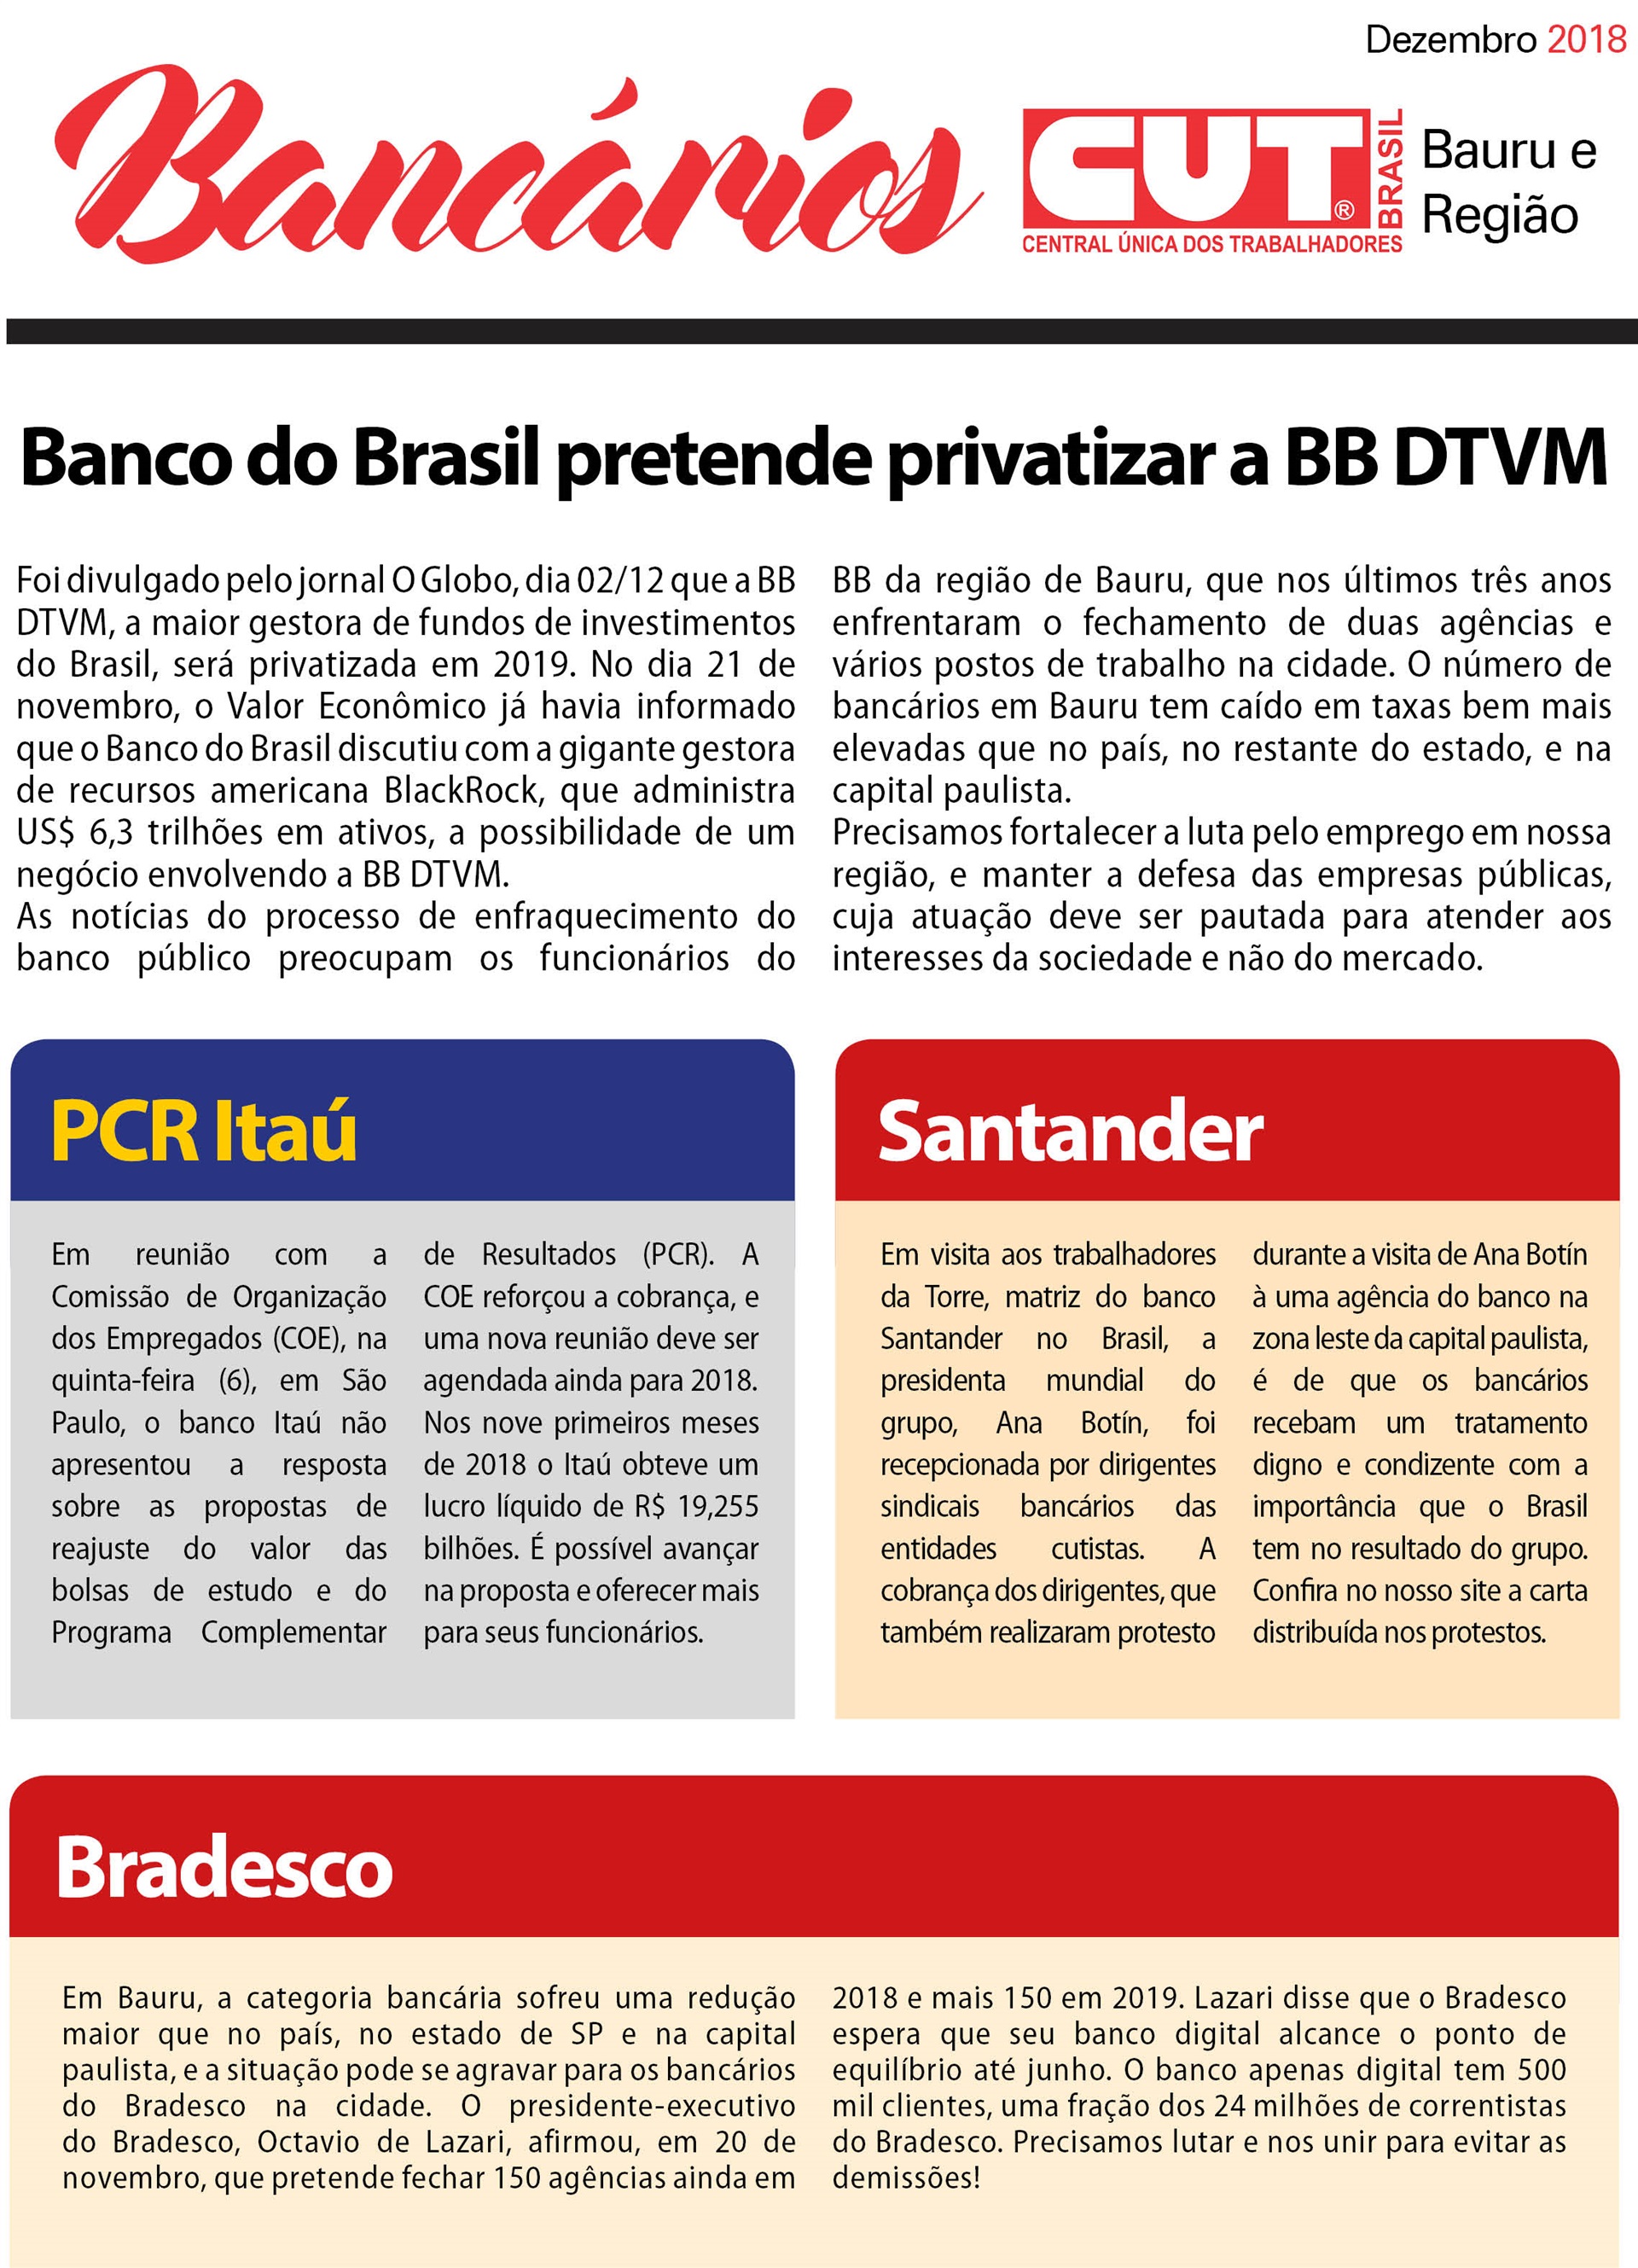 Jornal de Bauru - Banco do Brasil pretende privatizar a BB DTVM